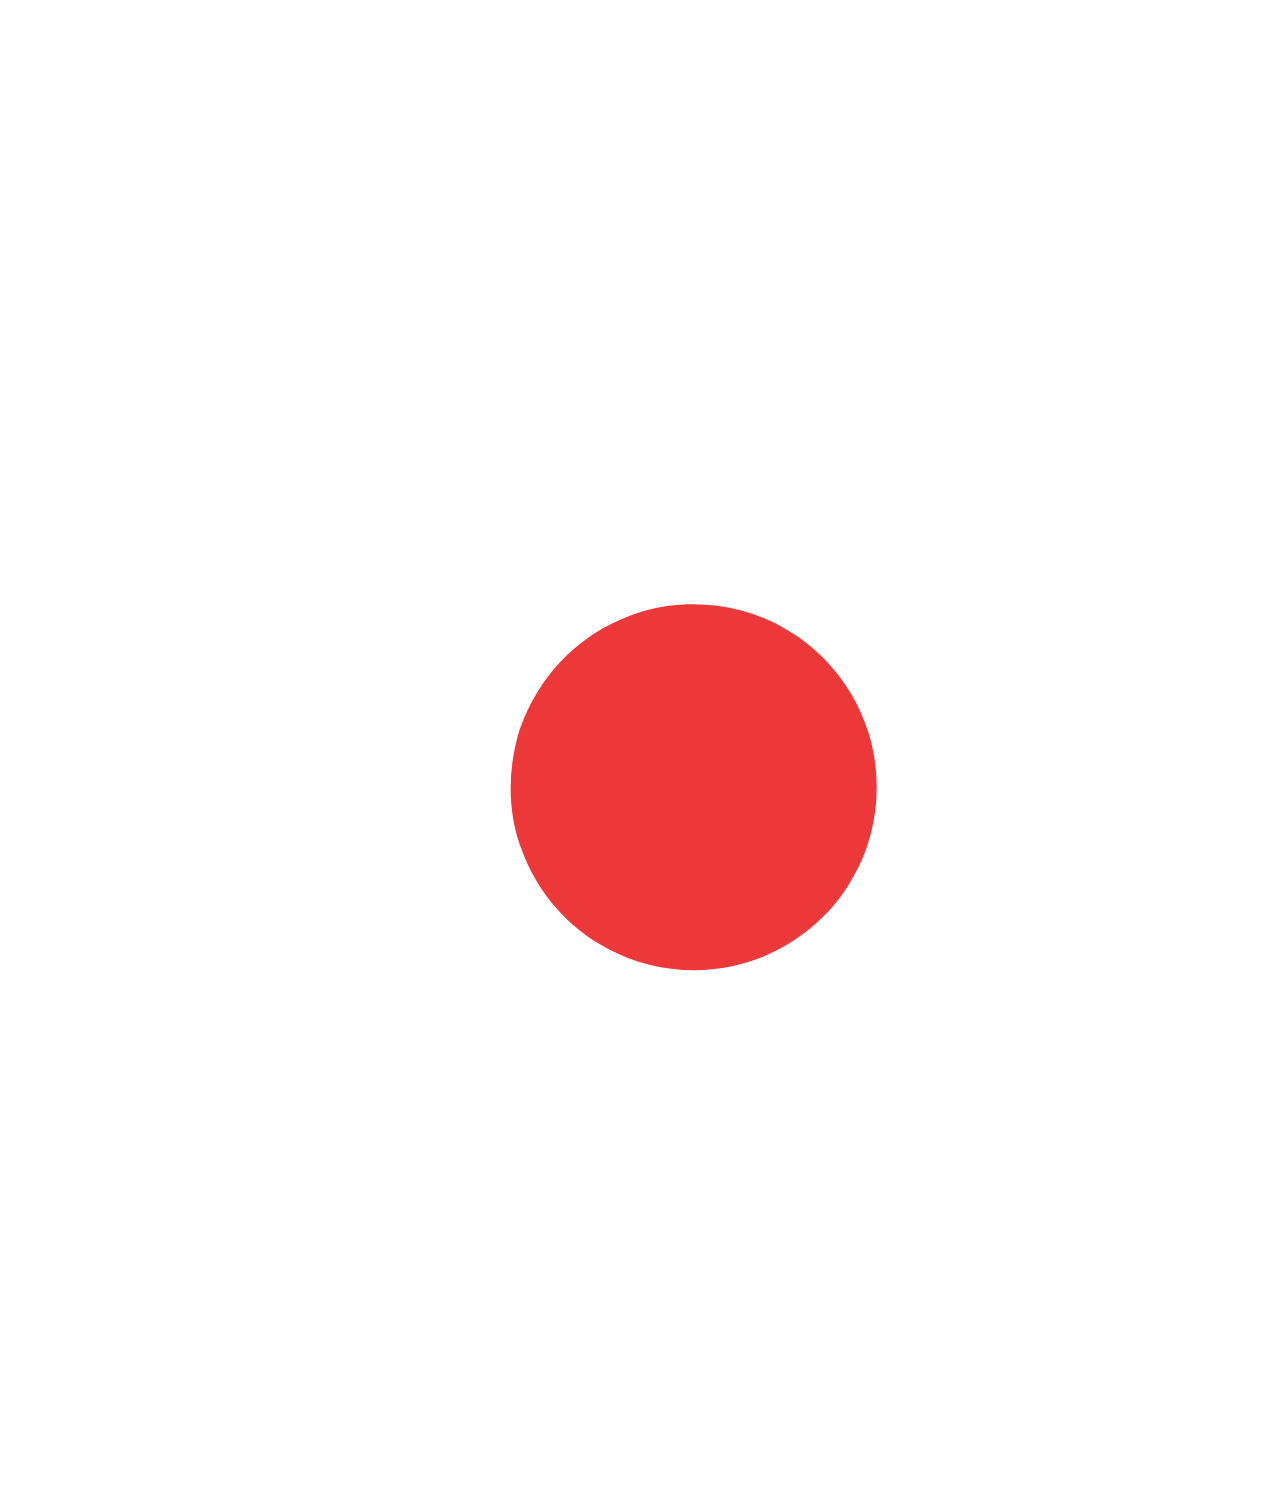 Aspen Pharmacare logo for dark backgrounds (transparent PNG)